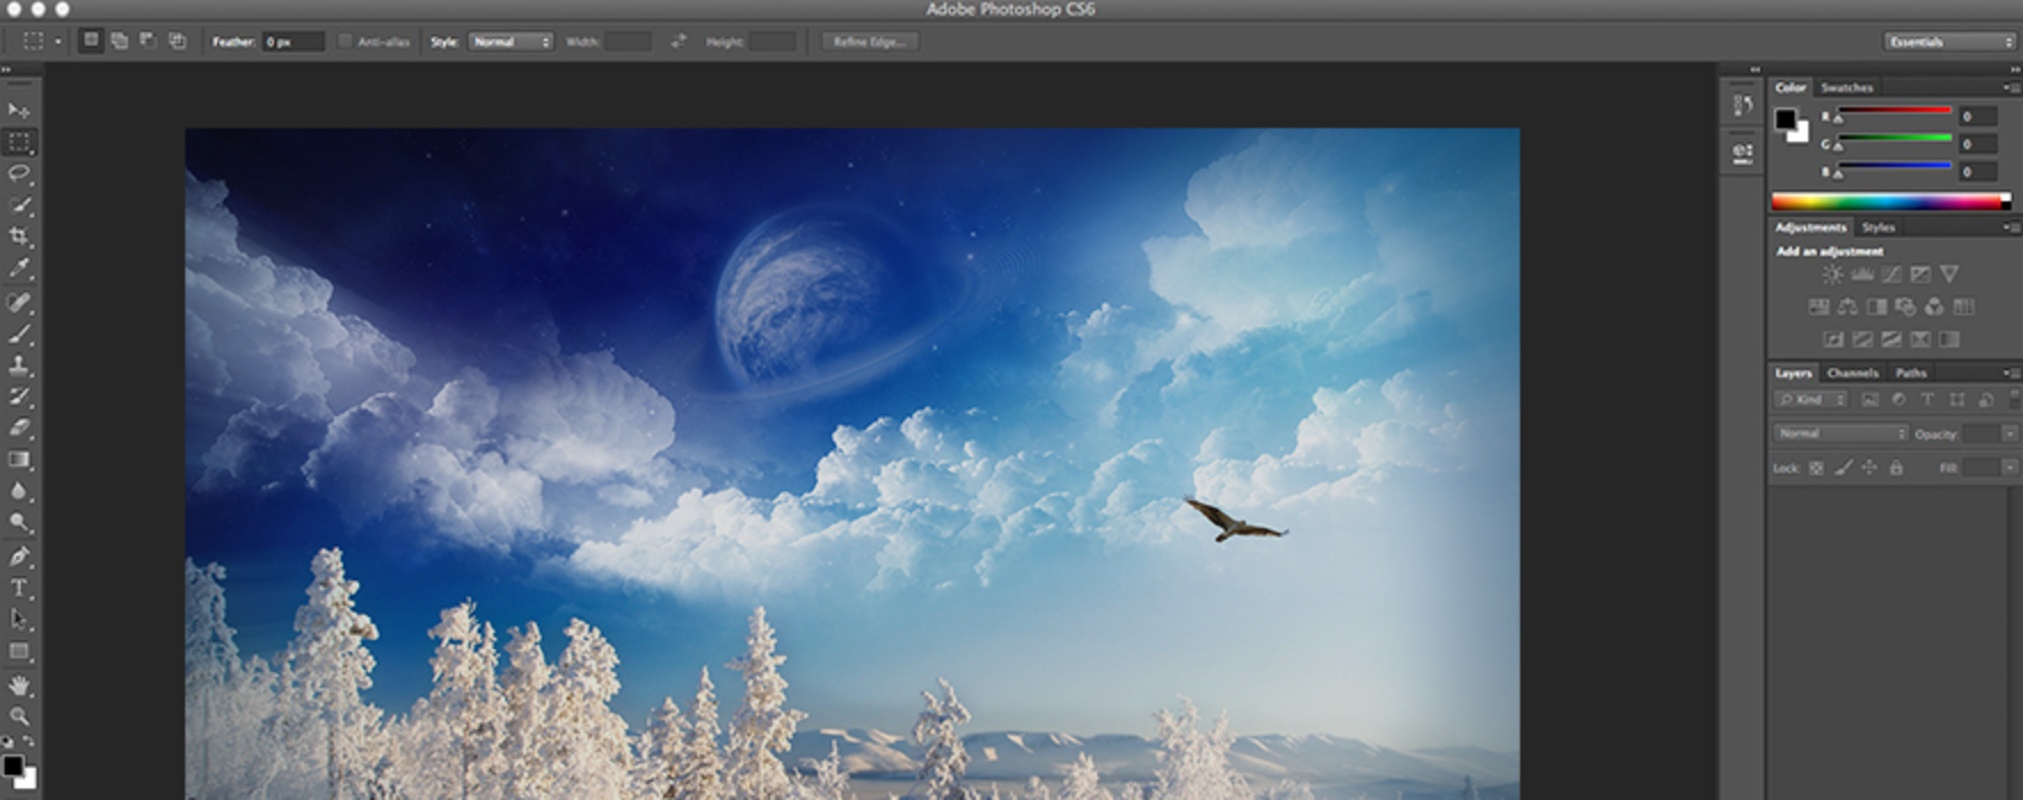 Adobe Photoshop CS6 Beta for Mac Screenshot 1